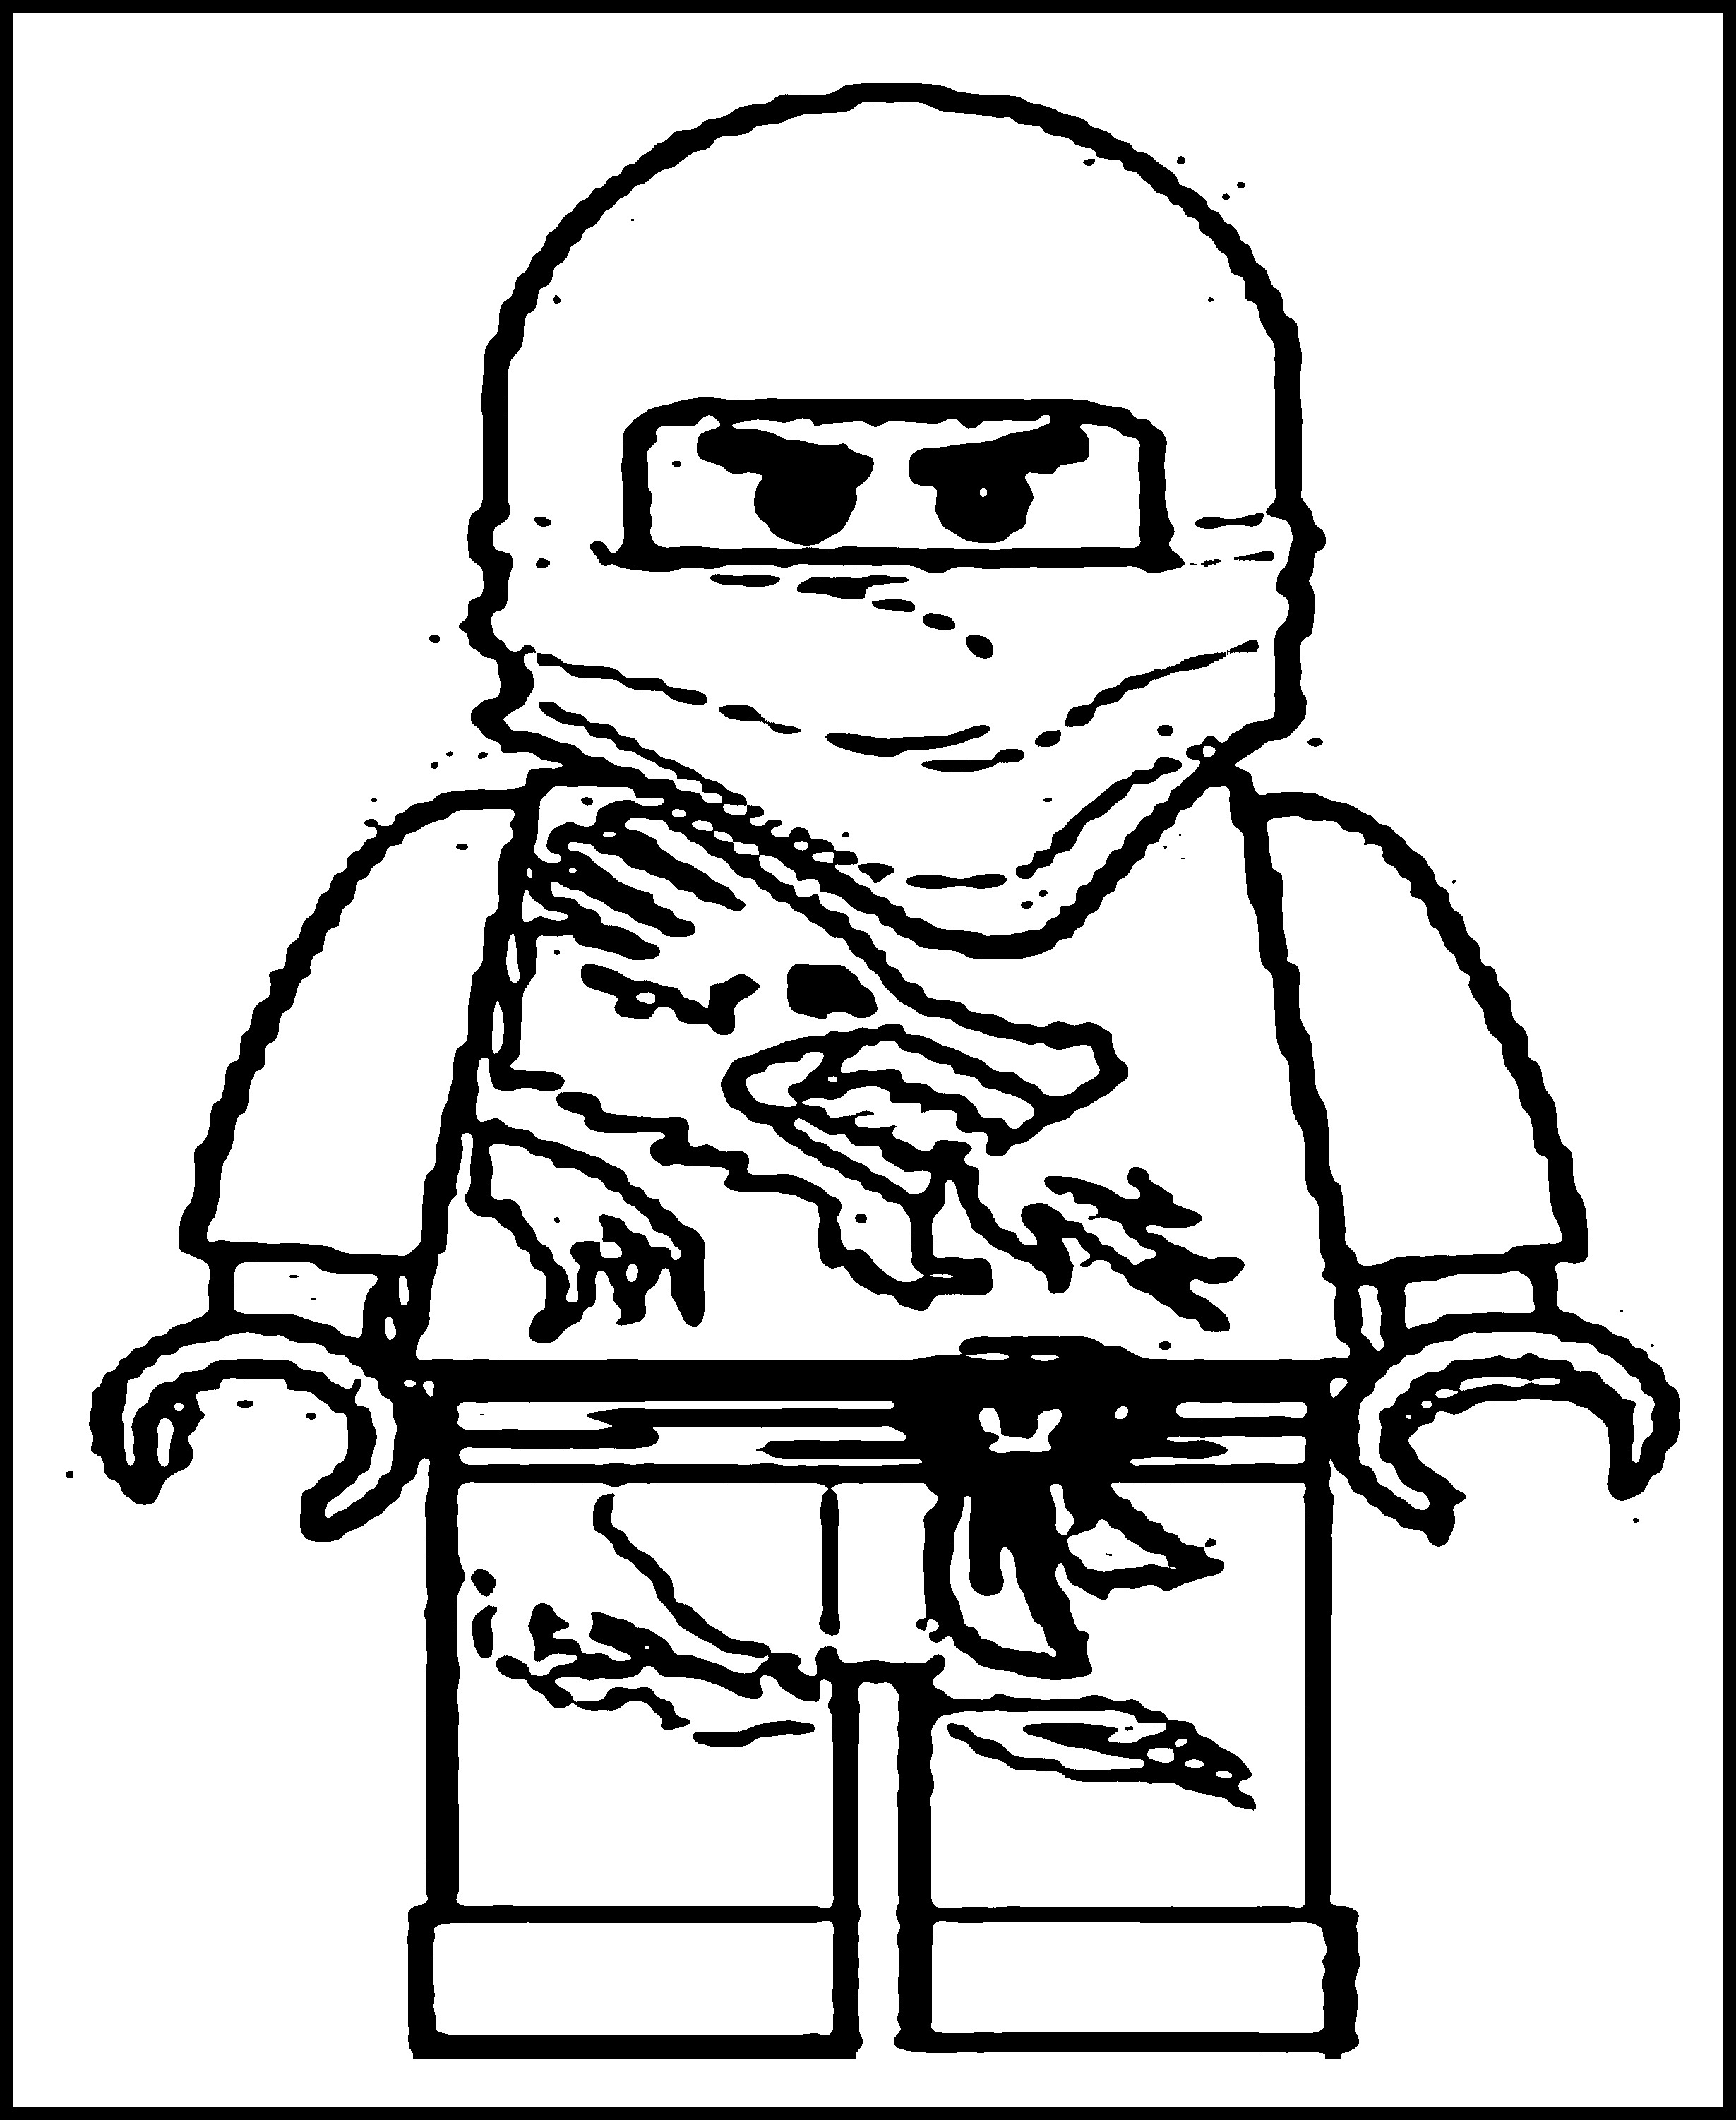  Lego Ninjago Coloring Pages | Lego Ninjago | FREE Lego Ninjago Images | #15